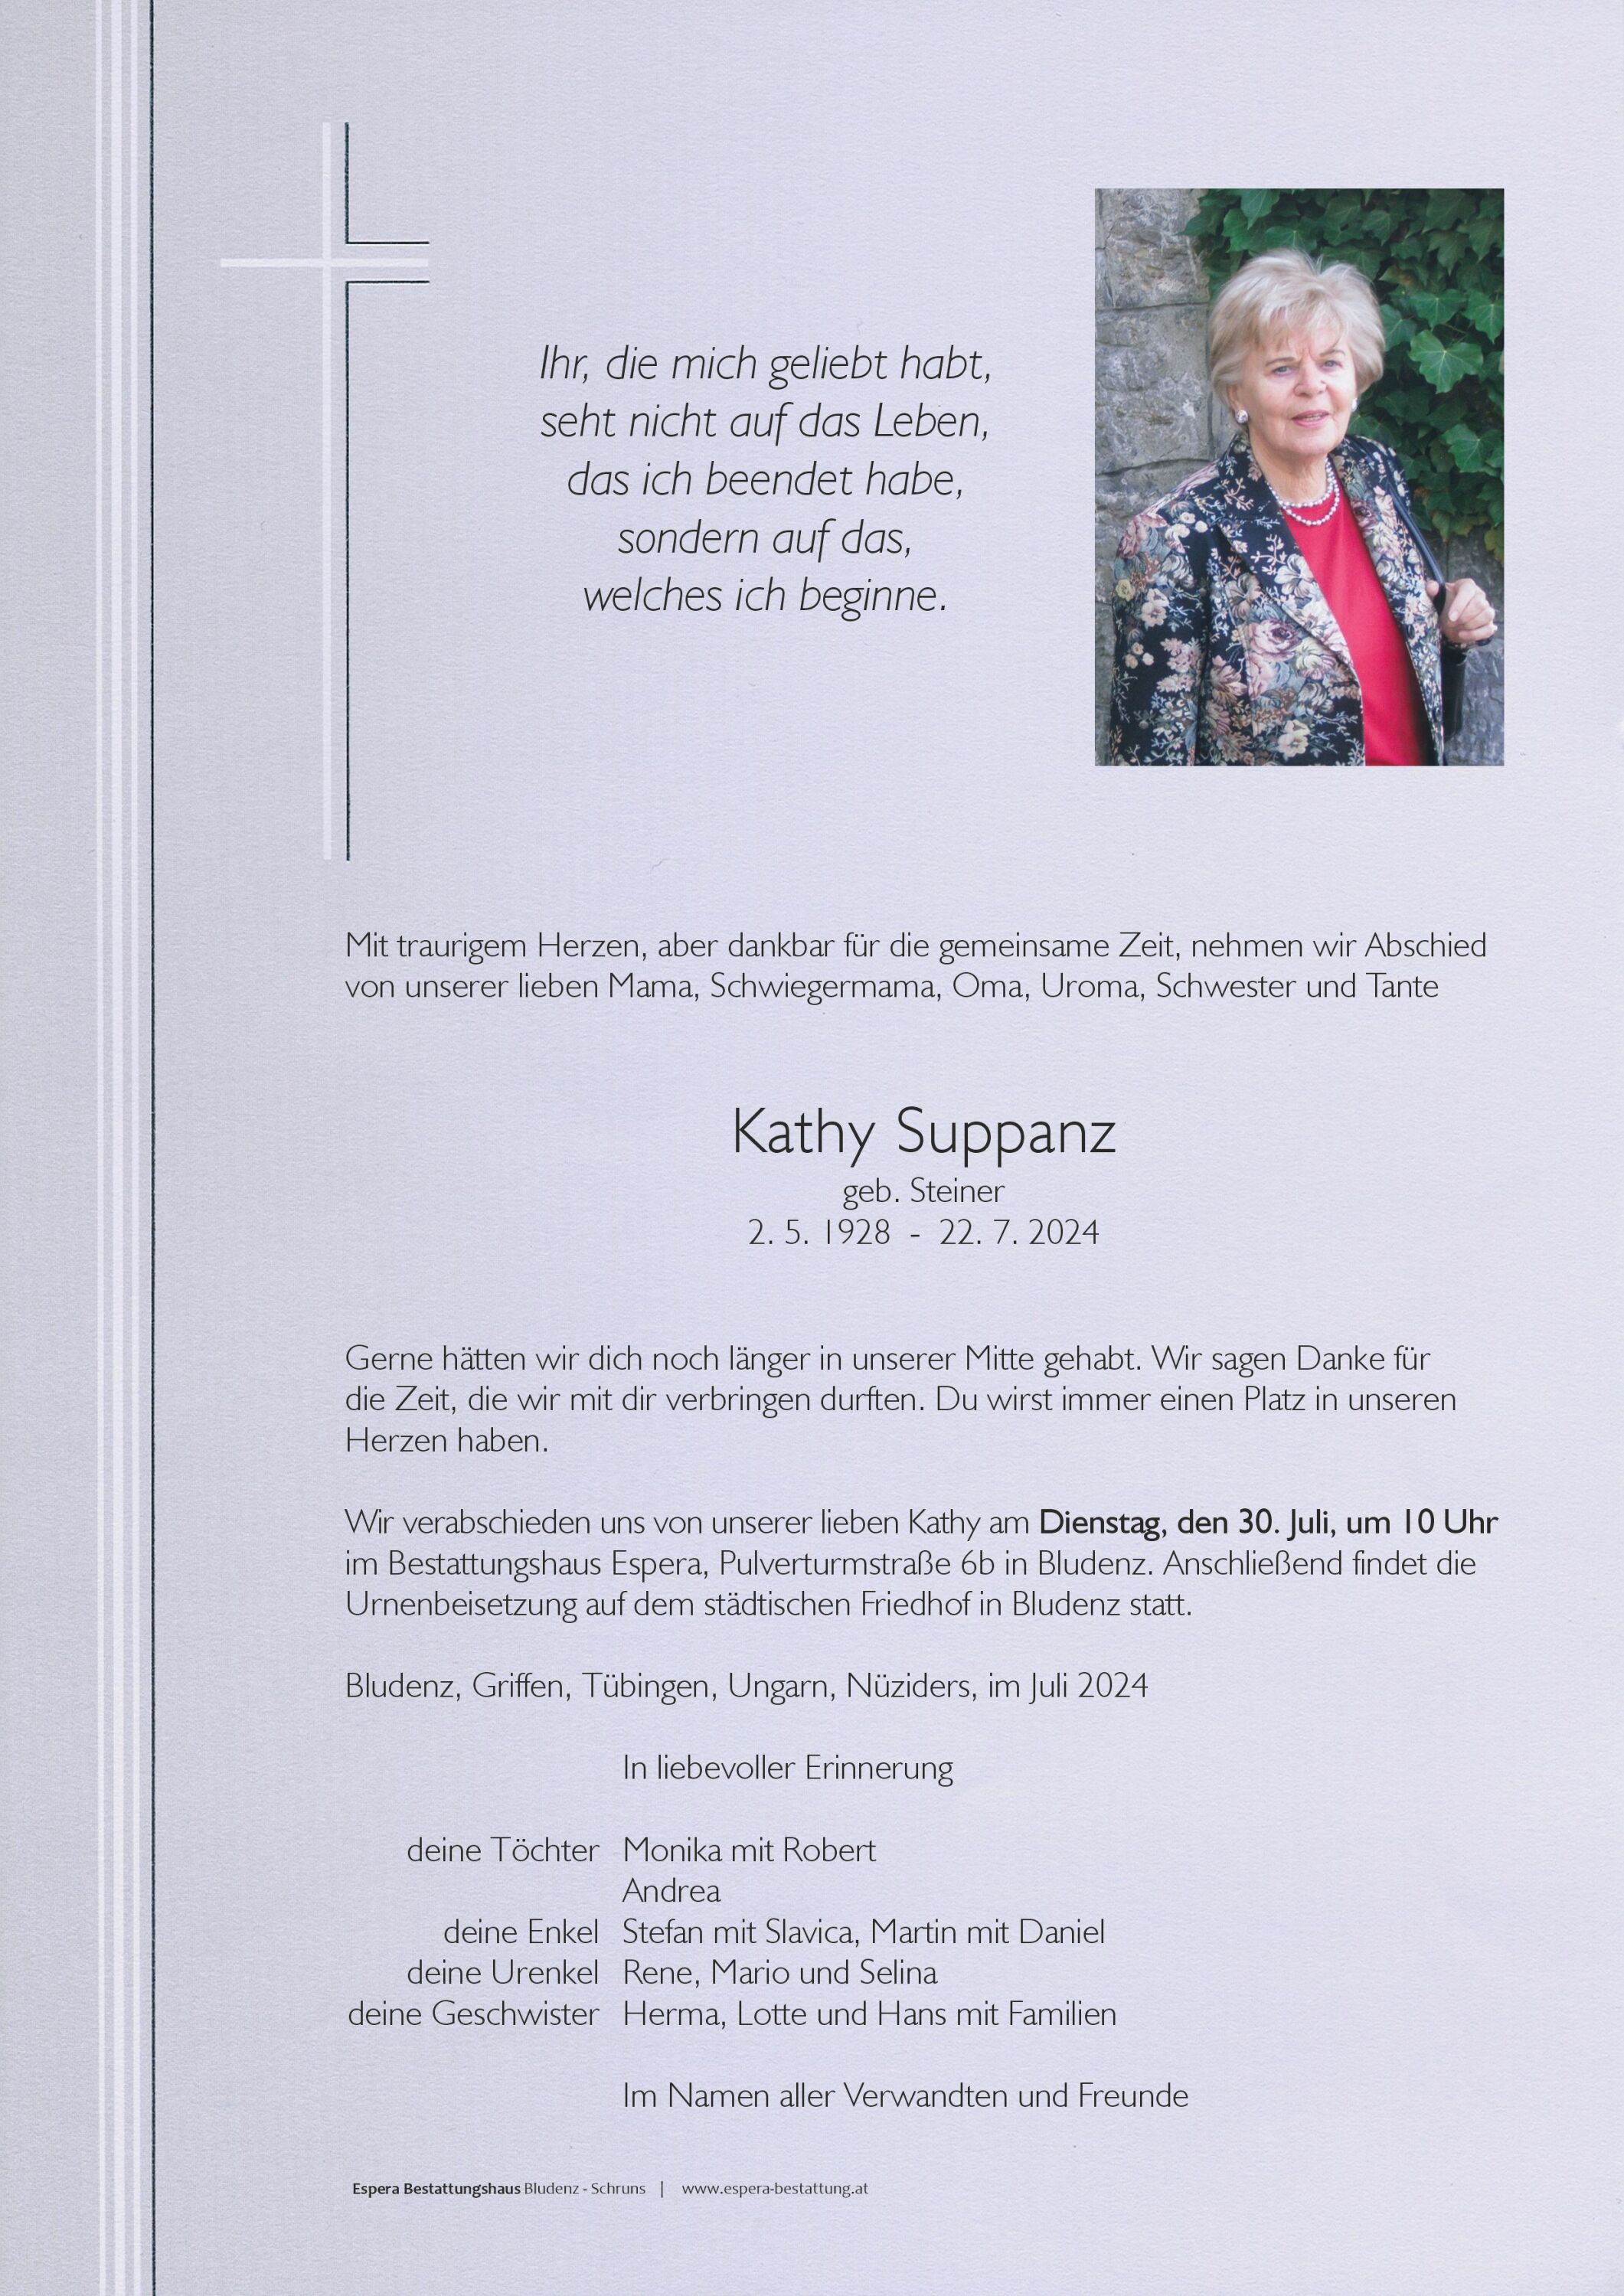 Kathy Suppanz